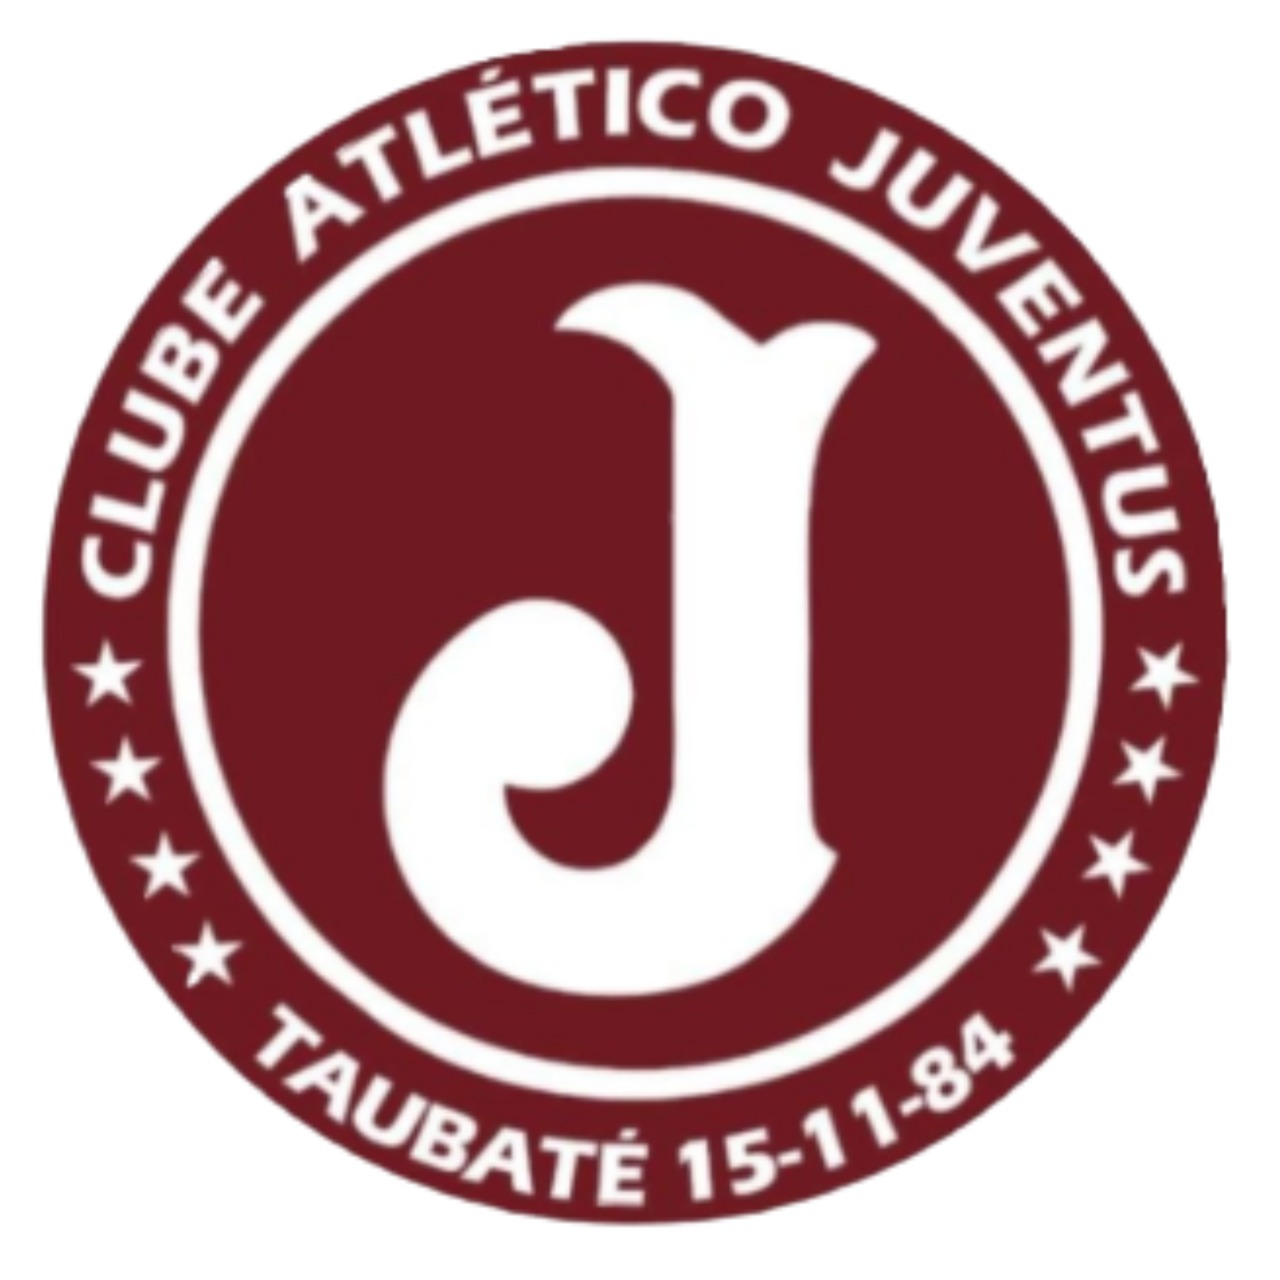 Clube Atlético JuventusSub 08, Sub 09 e Sub 10 estreiam no Campeonato  Paulista de Futsal - Clube Atlético Juventus